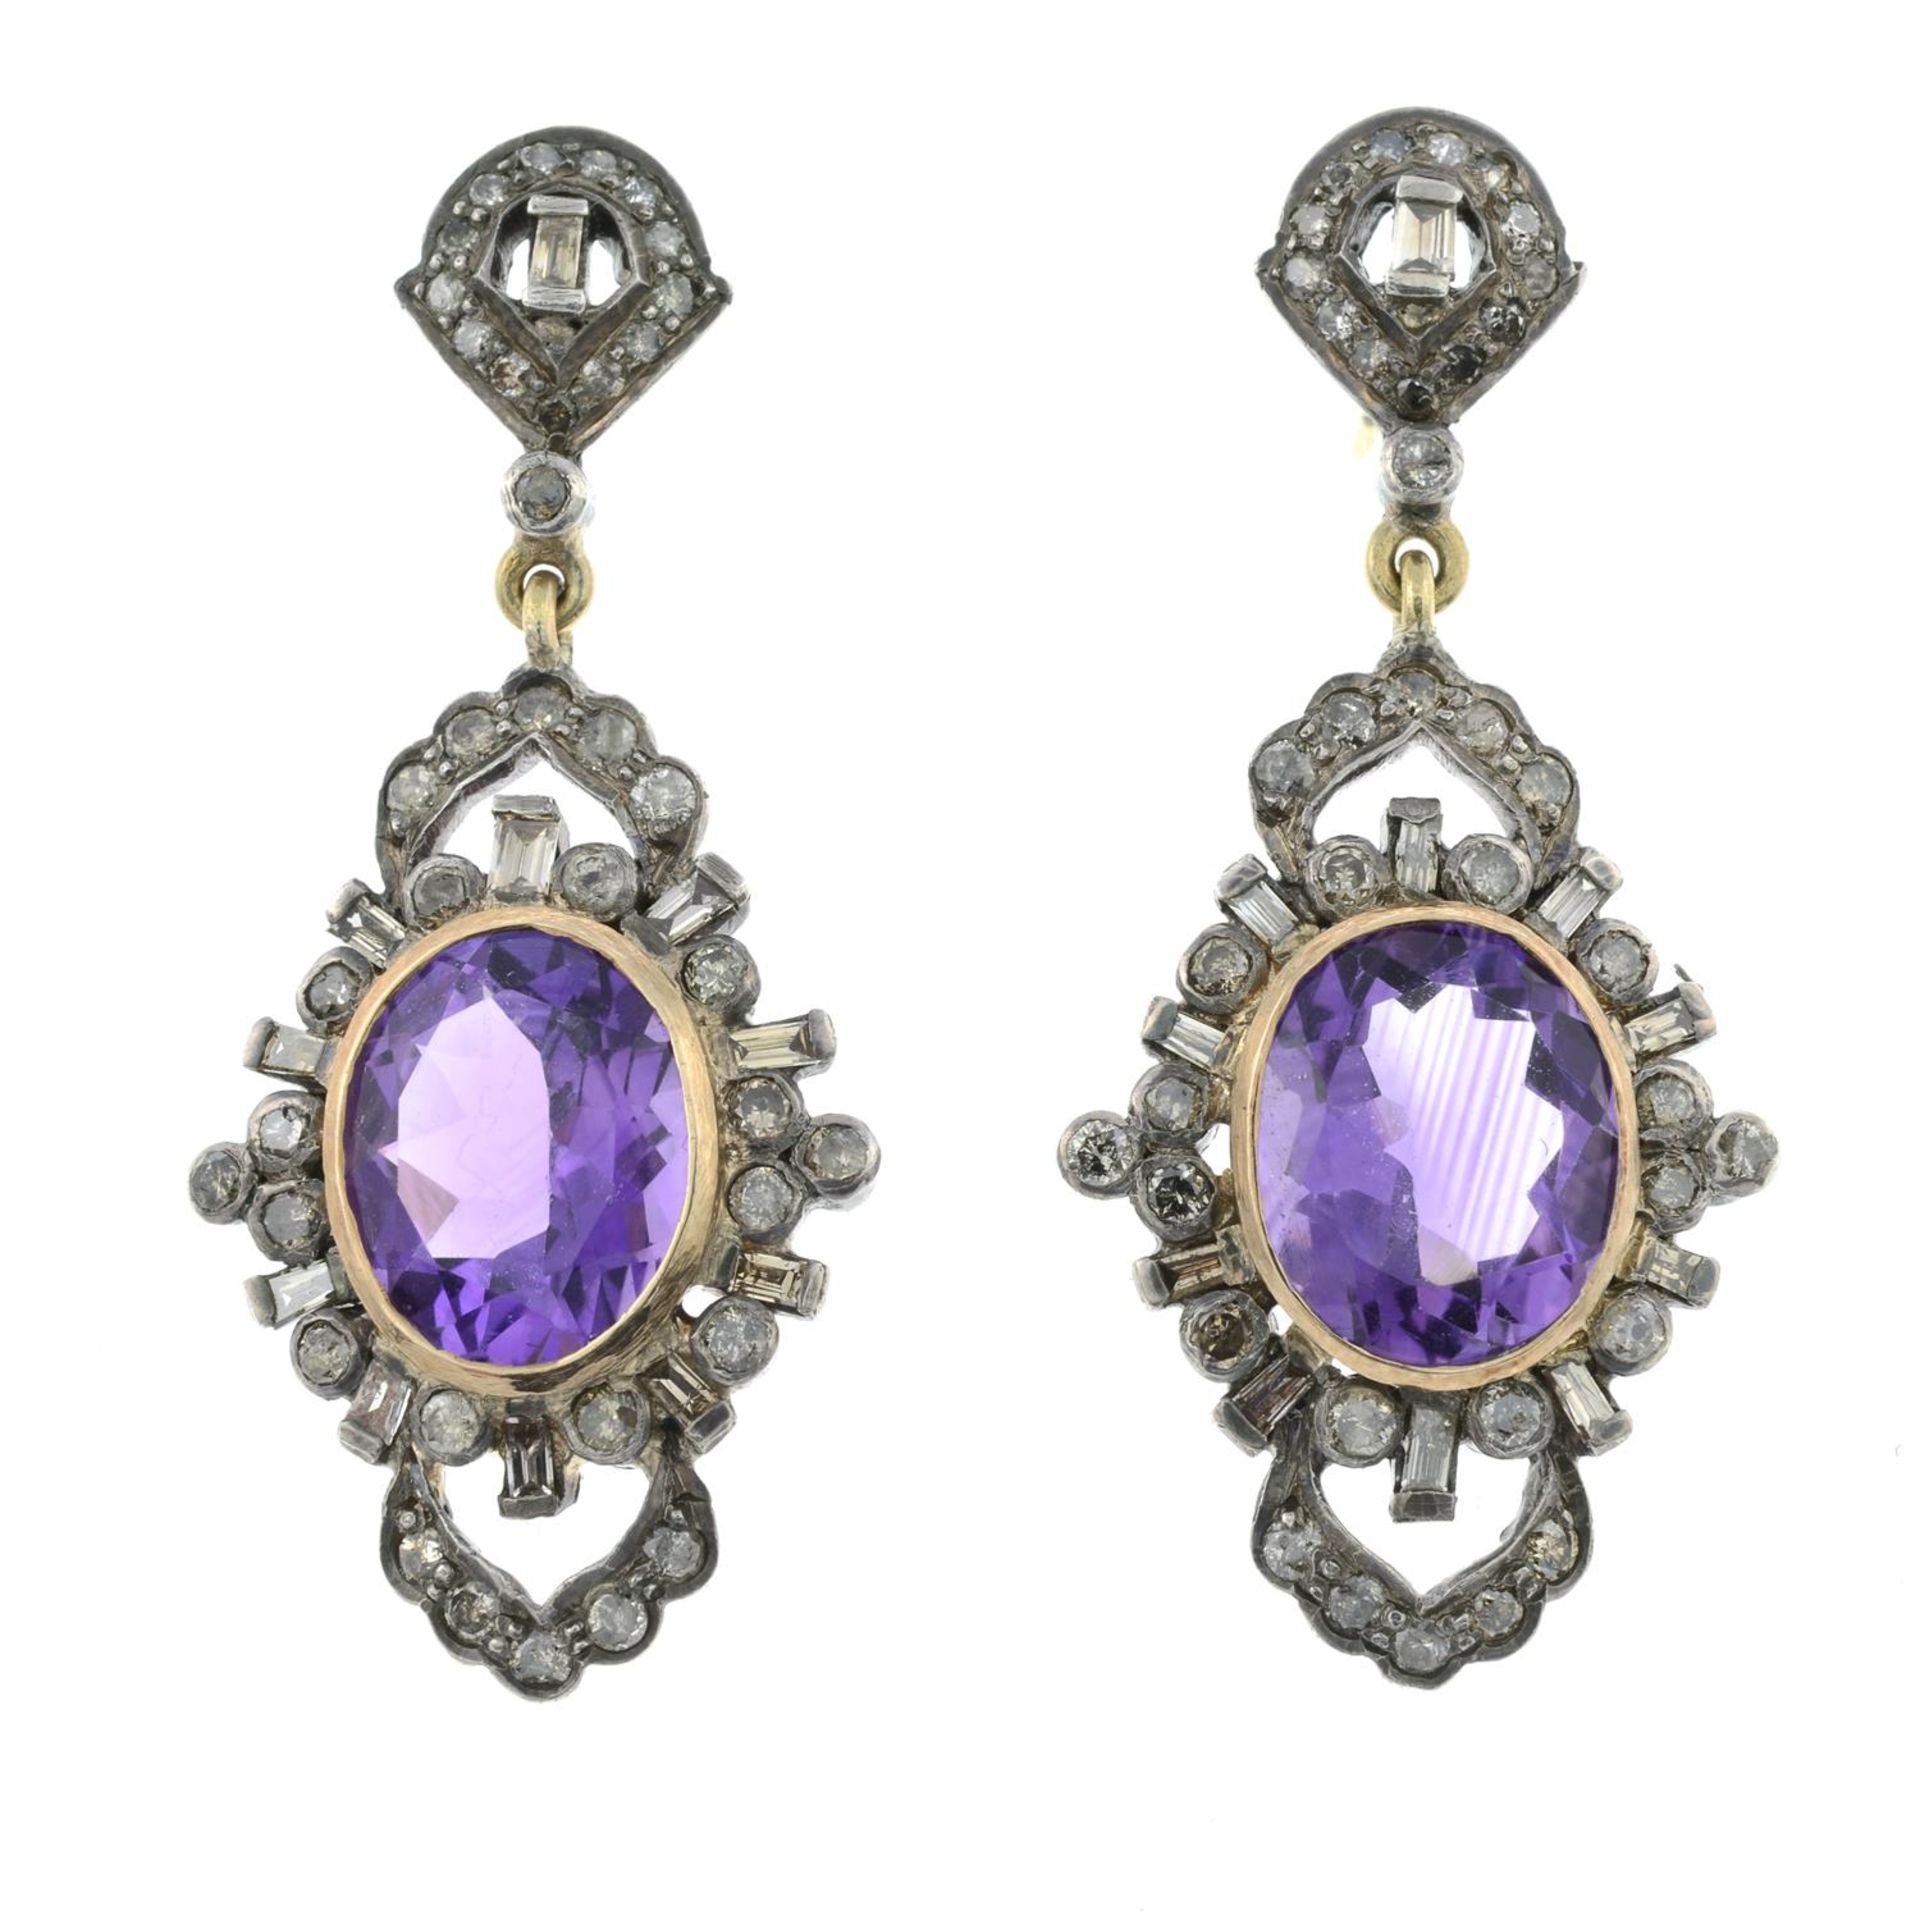 A pair of amethyst and diamond drop earrings.